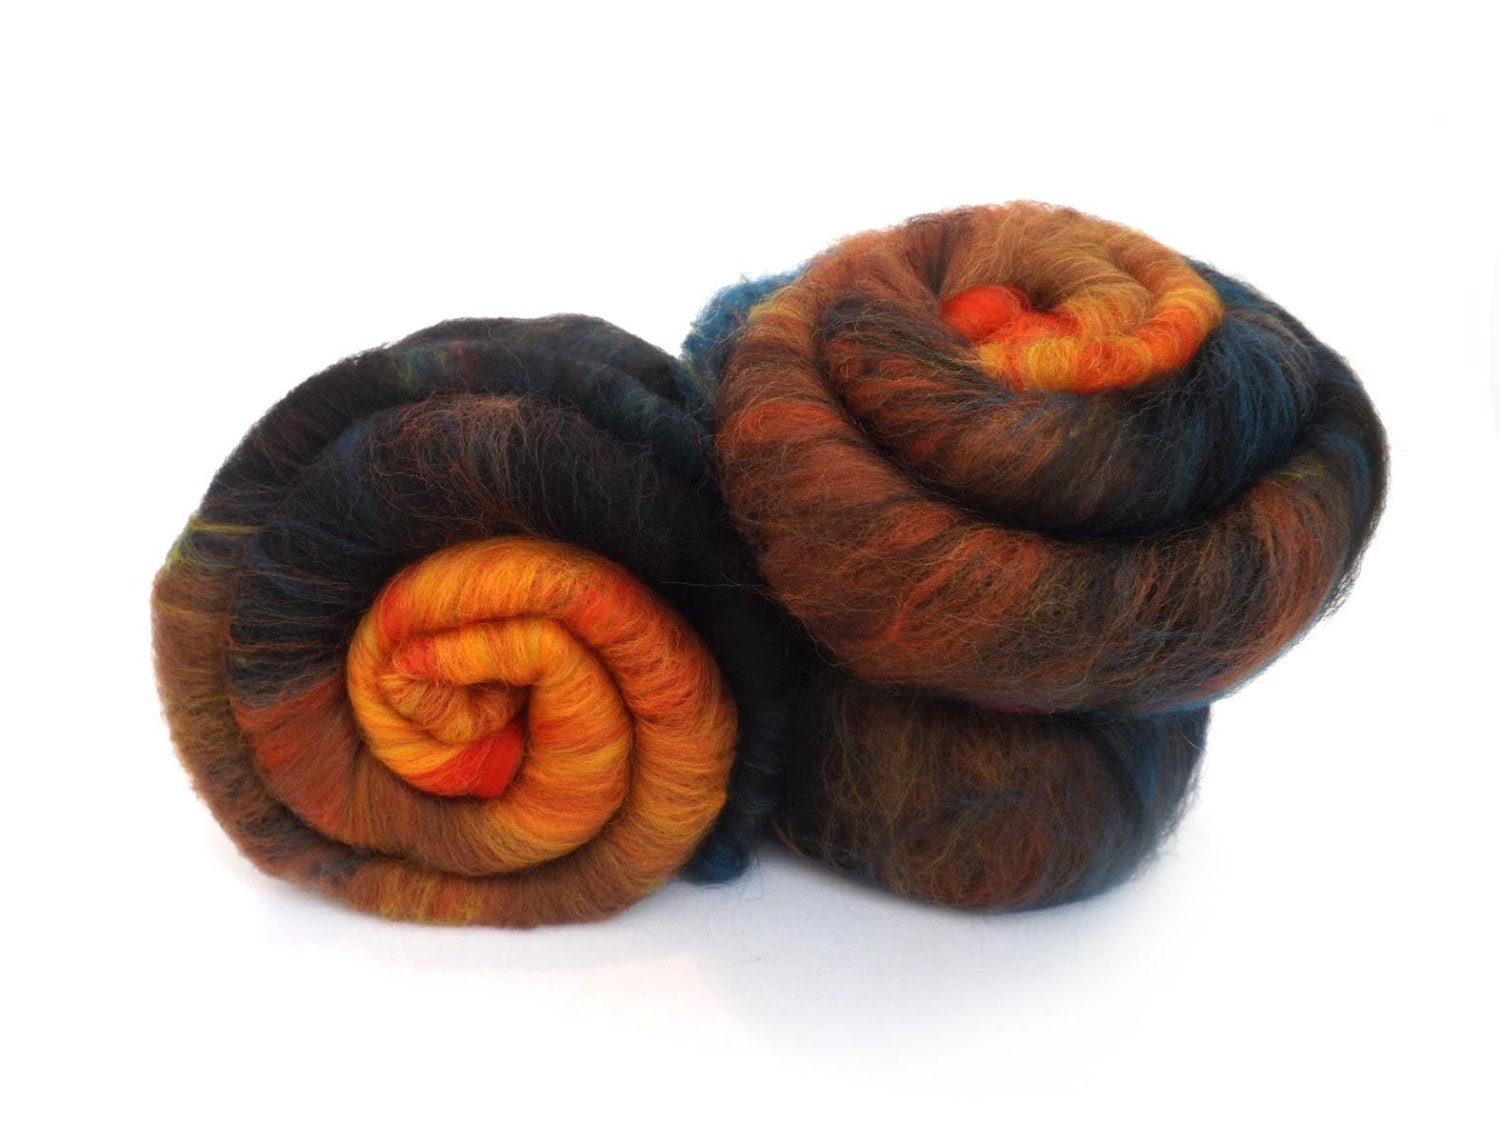 Batt - Orange - Teal - Merino wool - Tussah silk - Spinning - Felting - 100g - 3.5oz - ROOSTER - nunoco